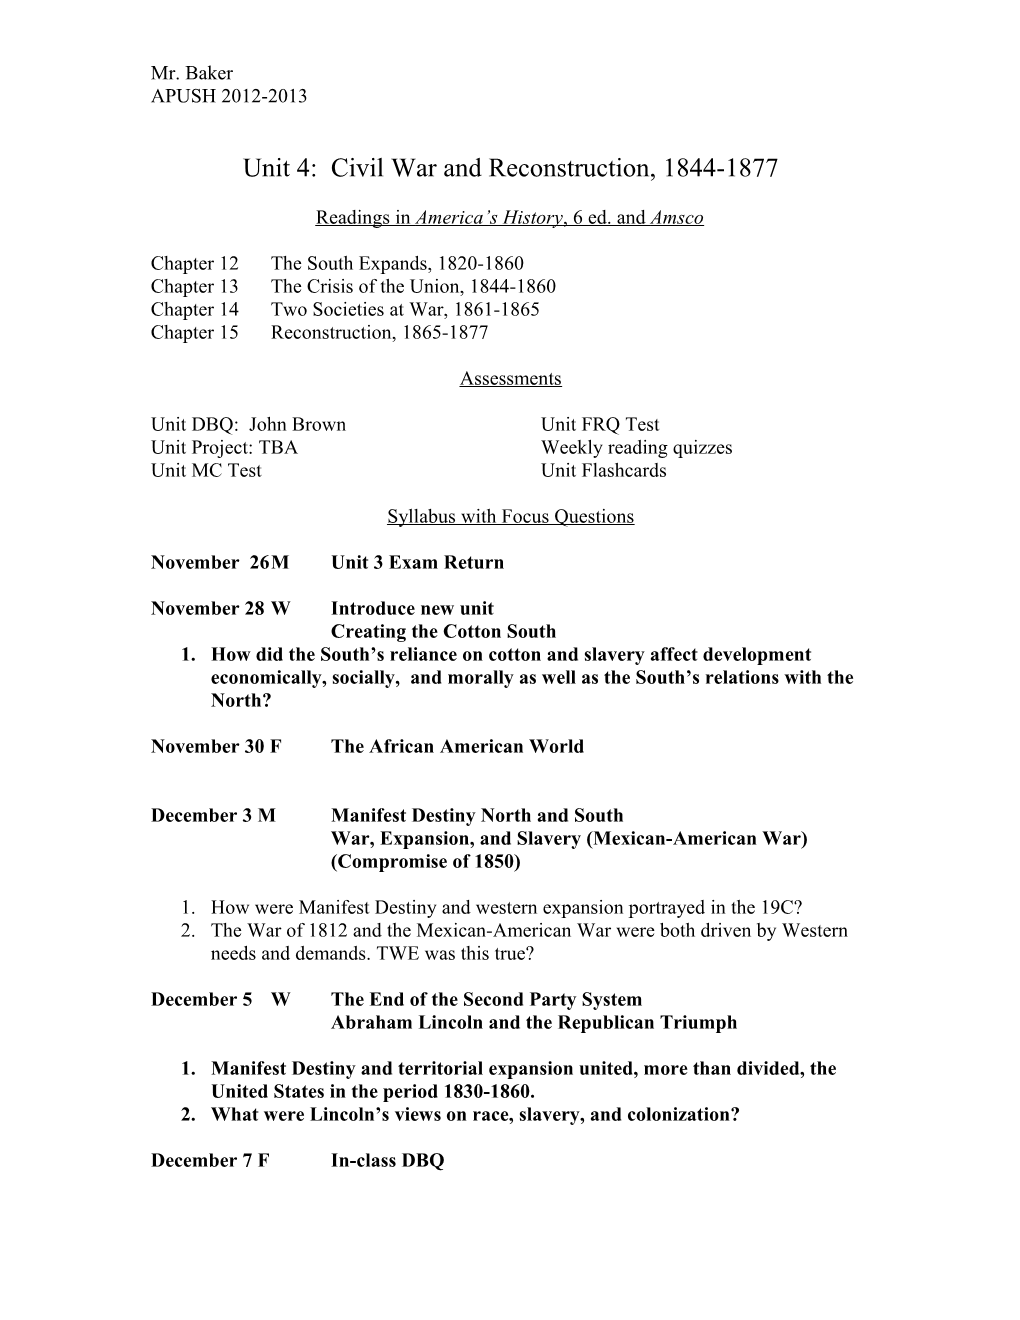 Unit 4: Civil War and Reconstruction, 1844-1877